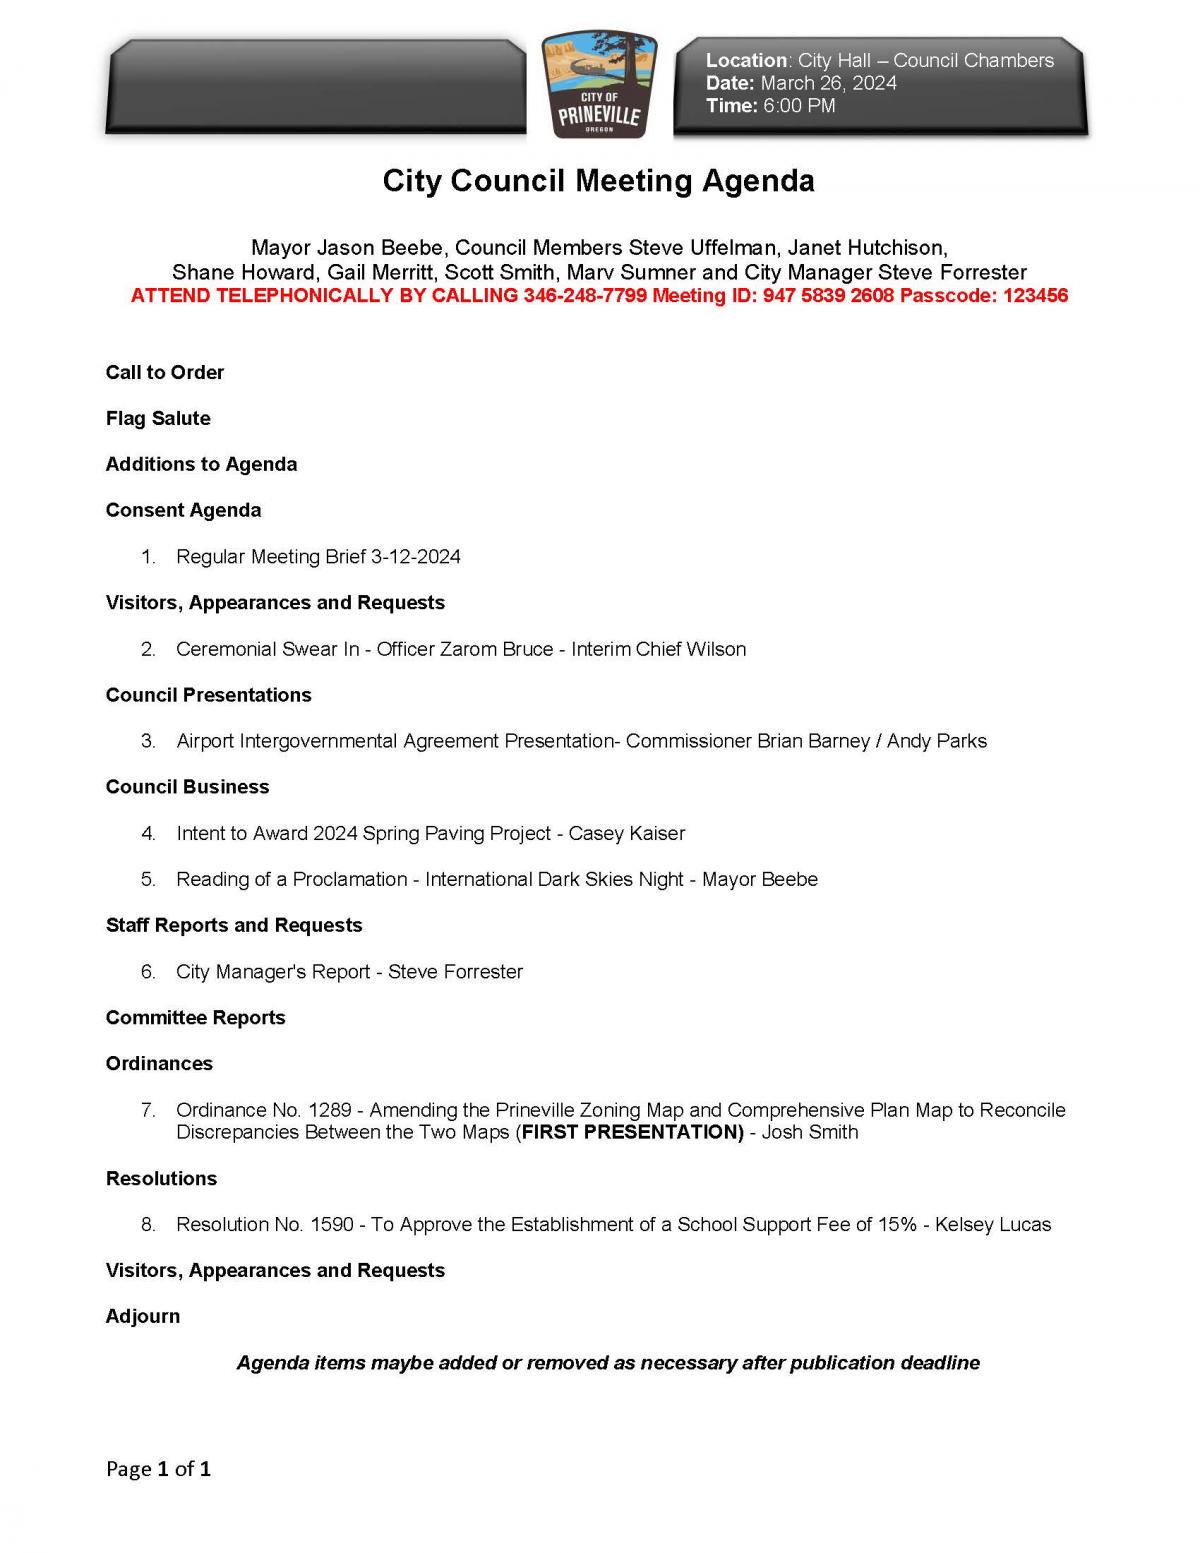 Council Agenda 3-26-2024